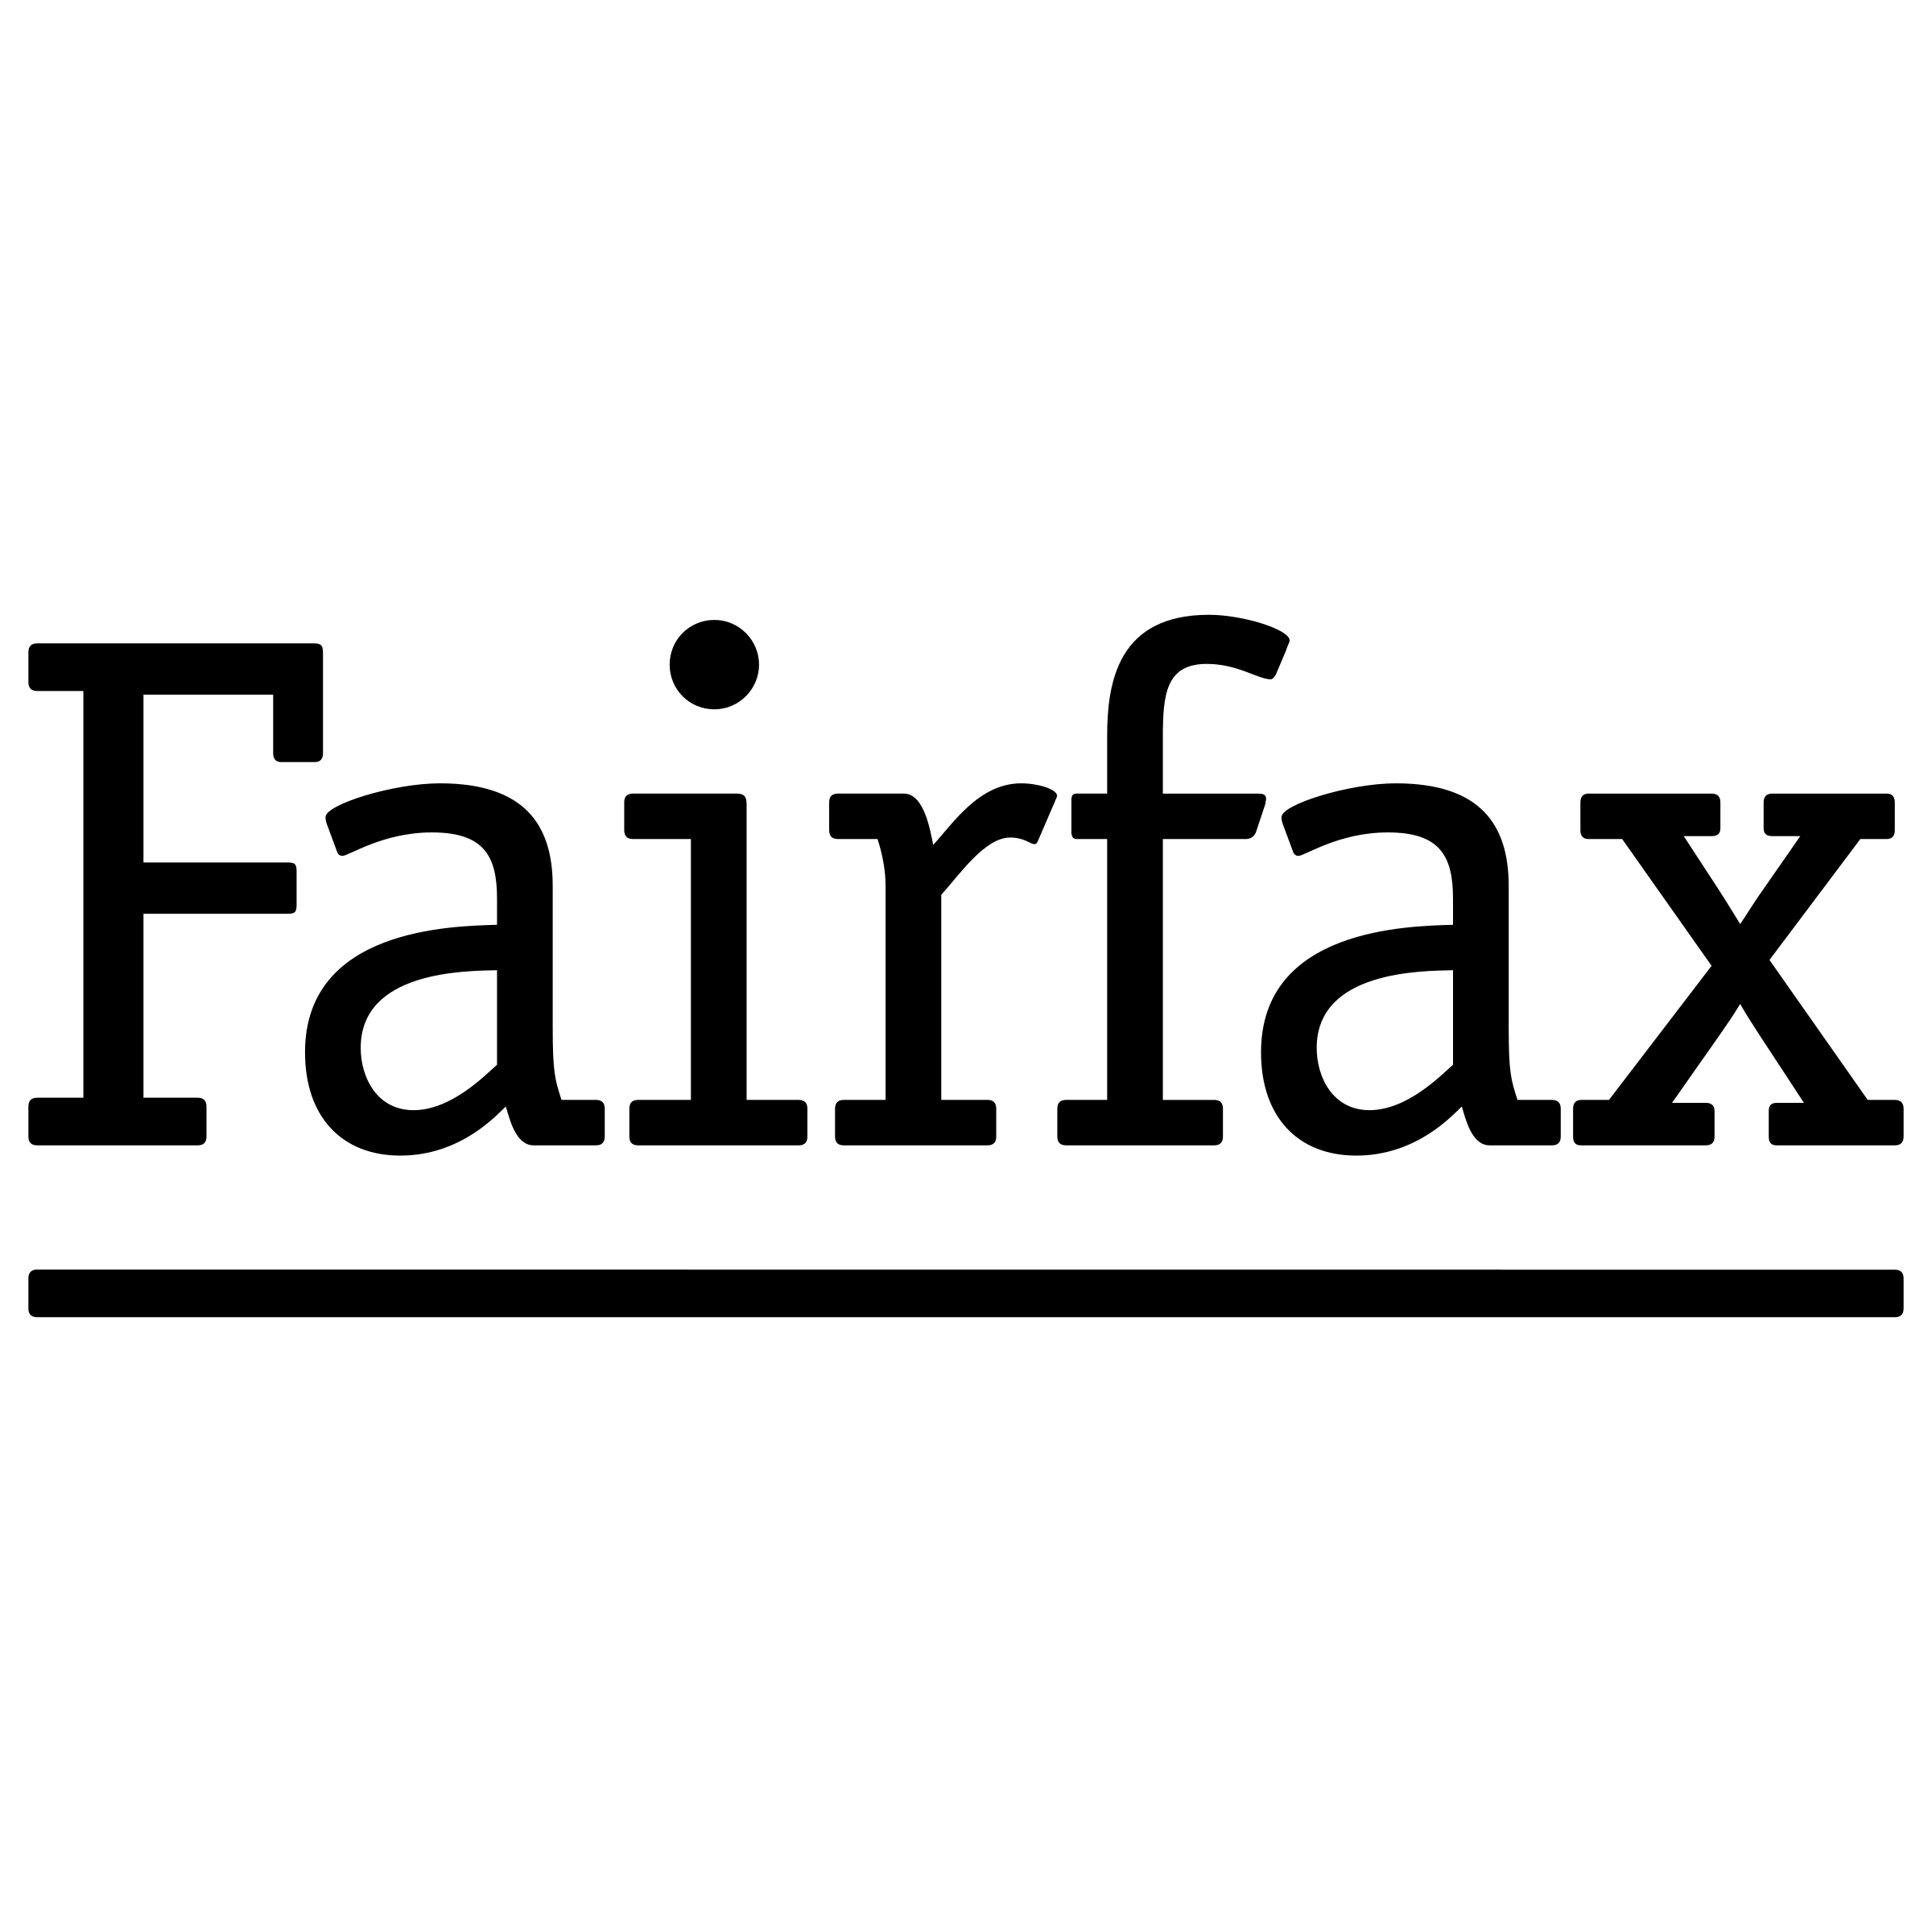 Fairfax Logo - Fairfax Logo PNG Transparent & SVG Vector - Freebie Supply